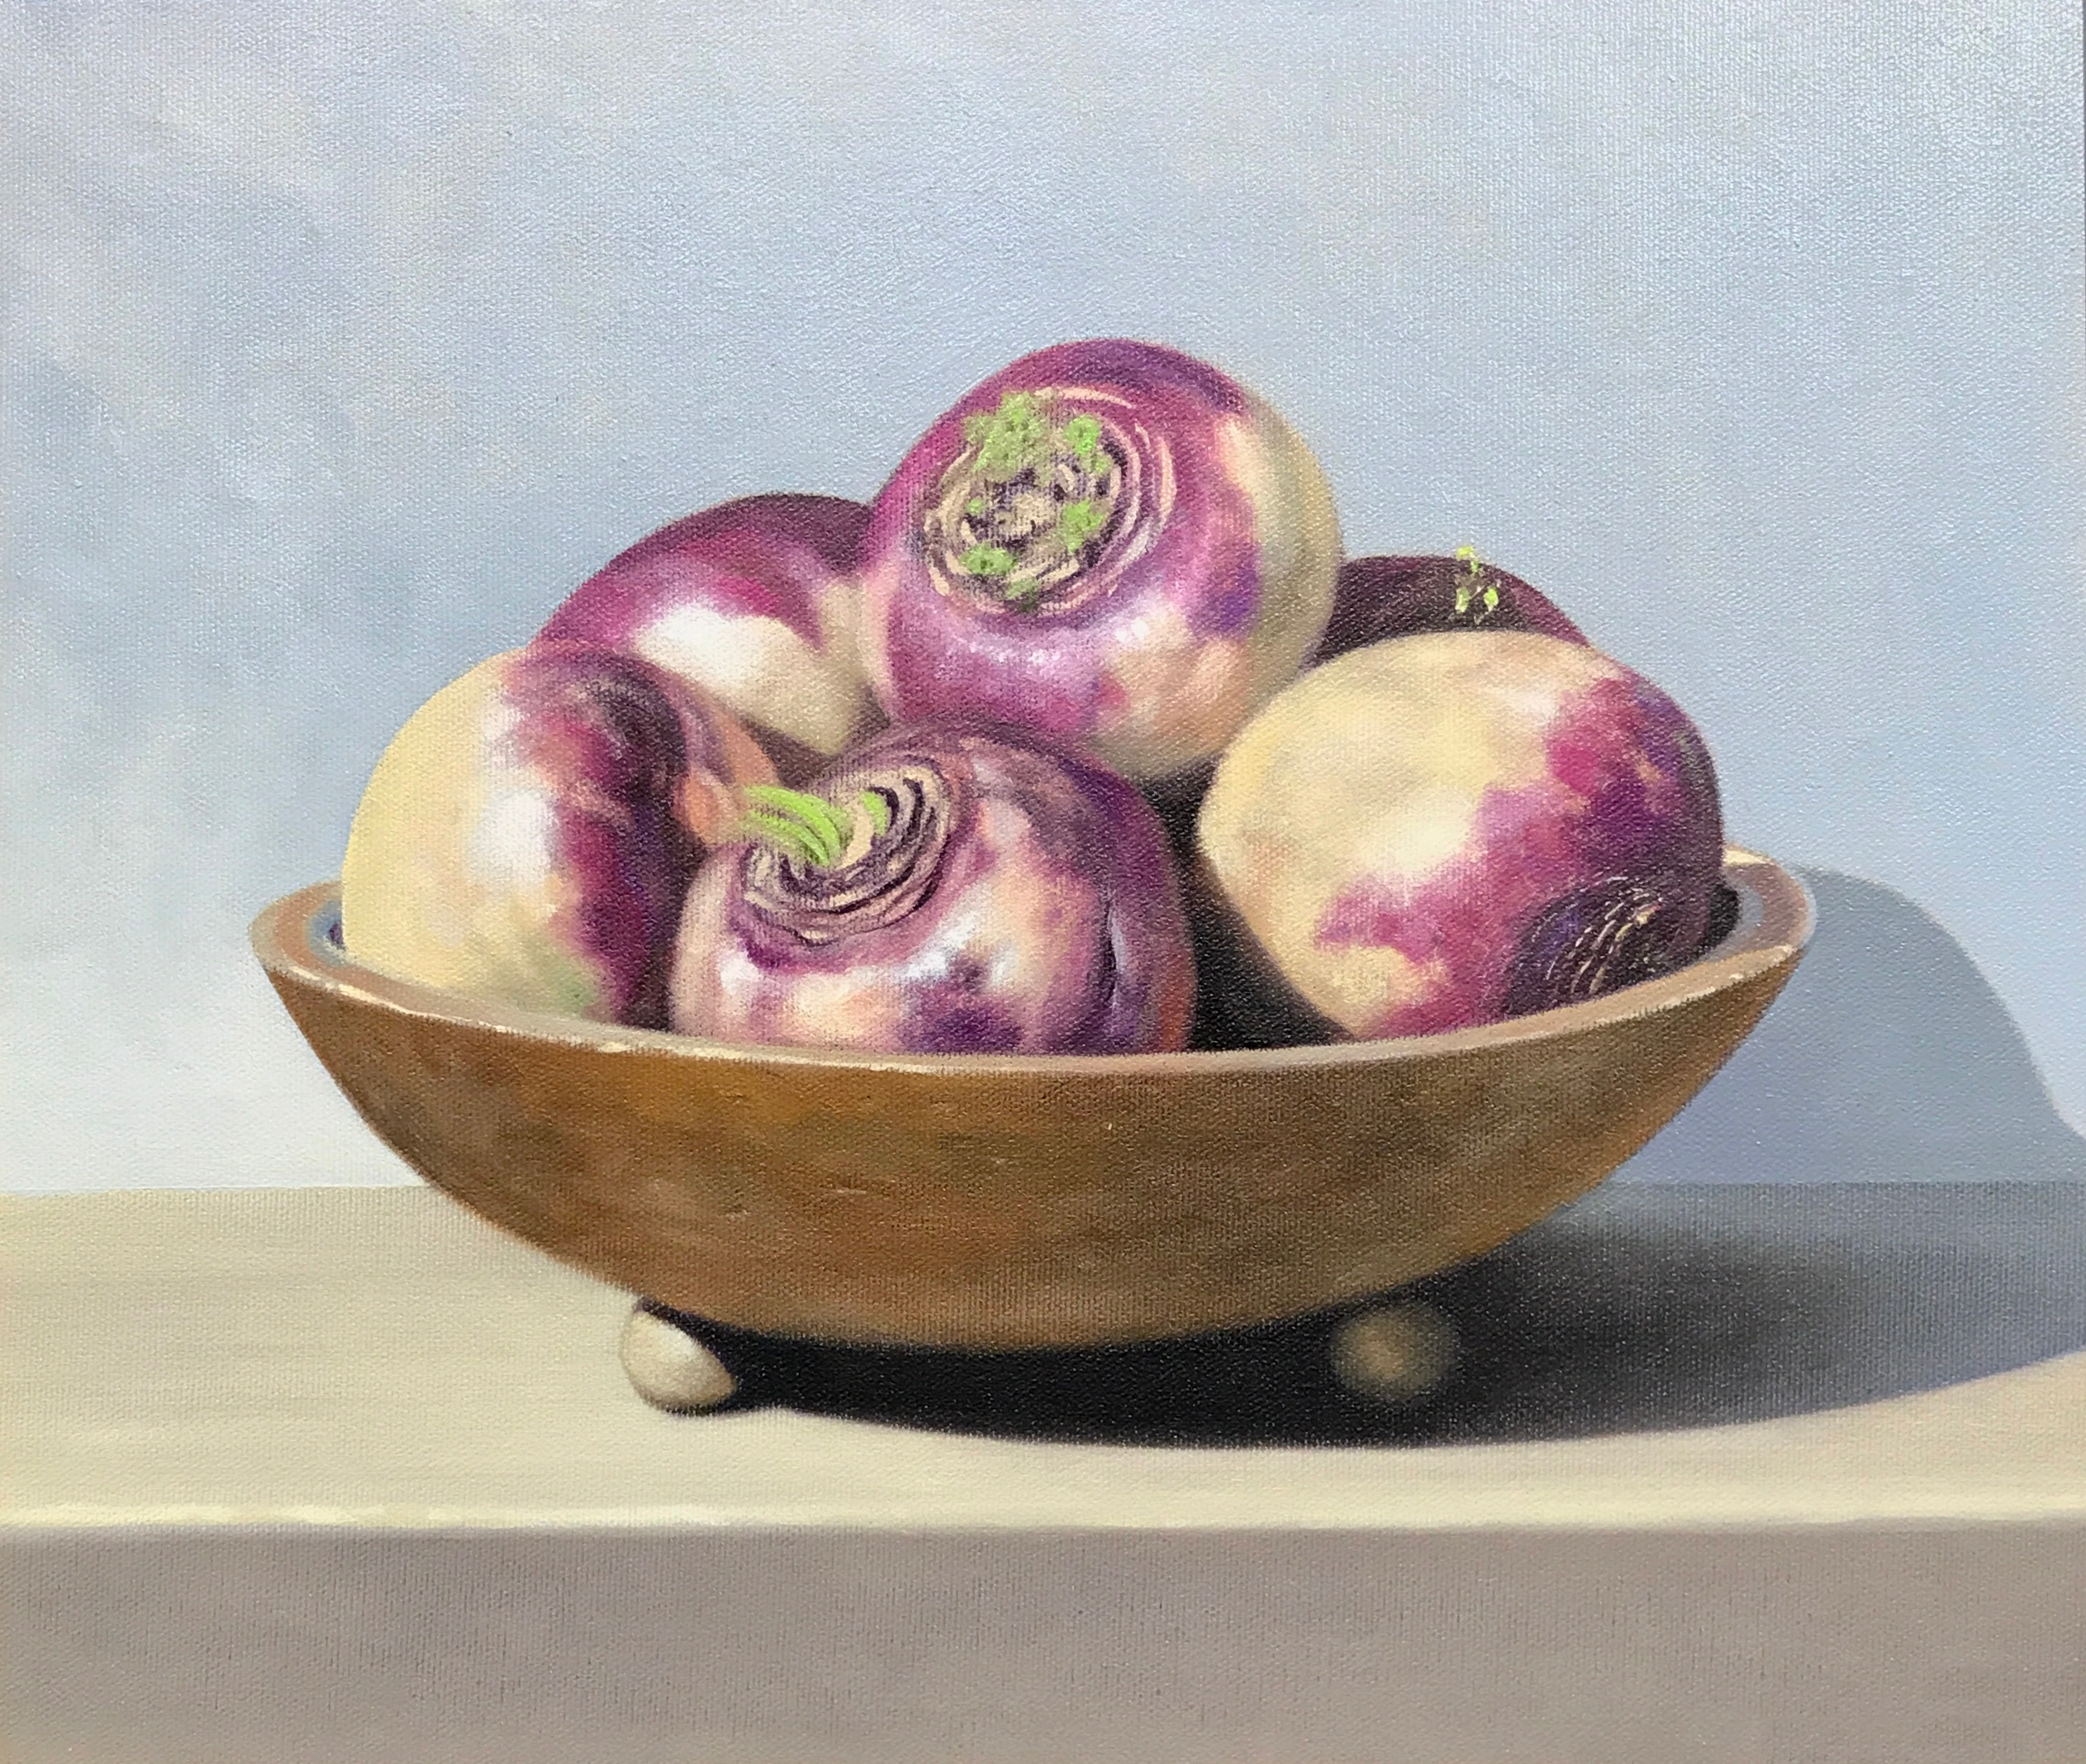 Bowl of turnips qzshp4